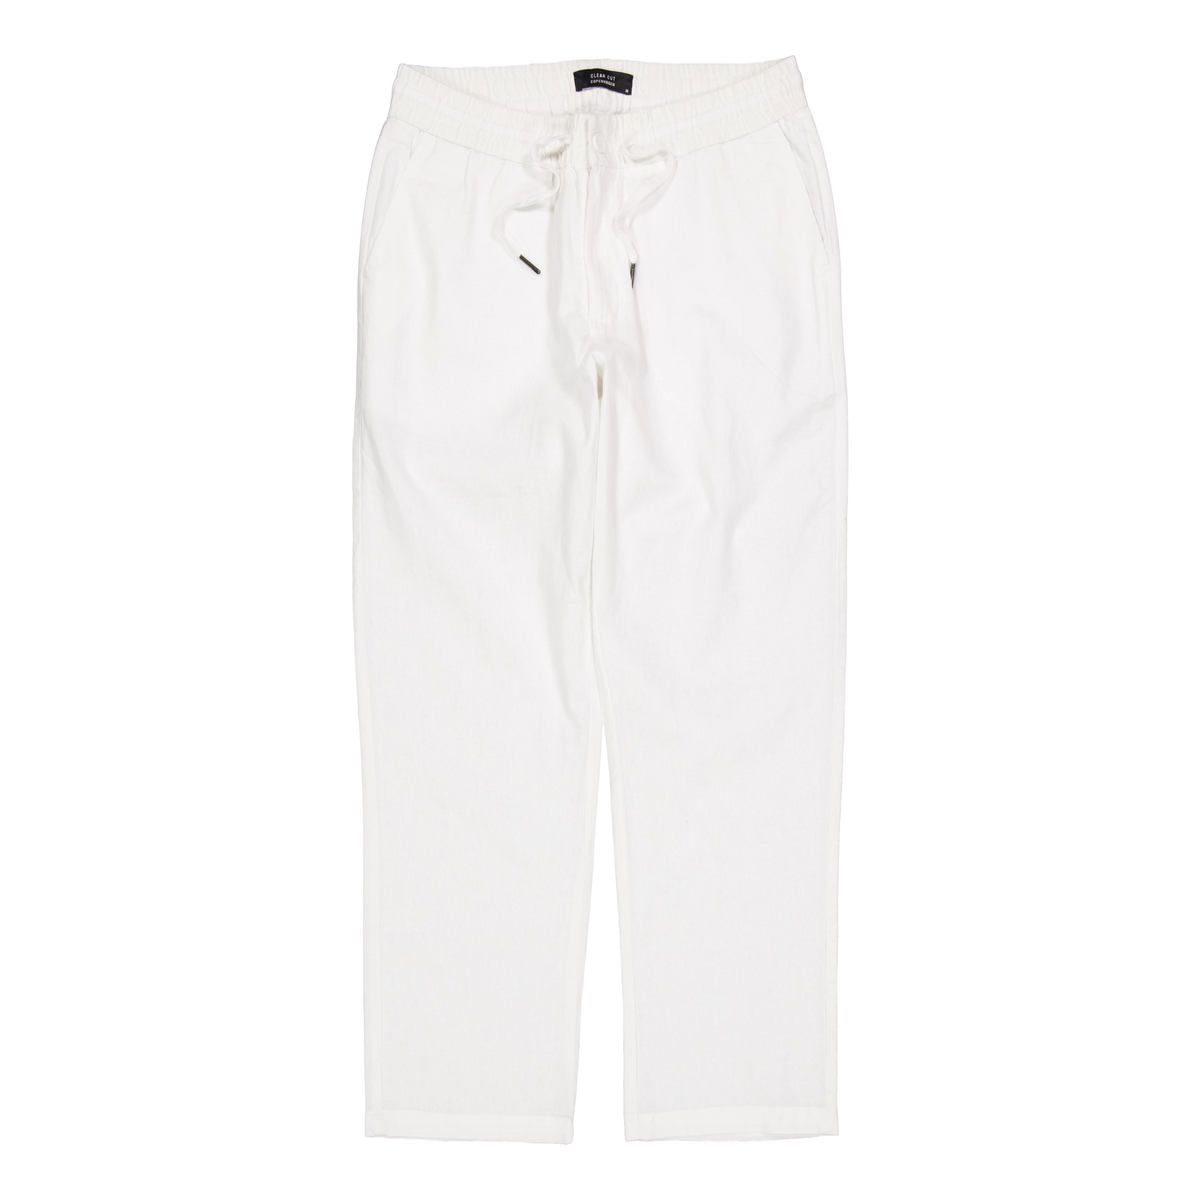 Barcelona Cotton / Linen Pants White 02